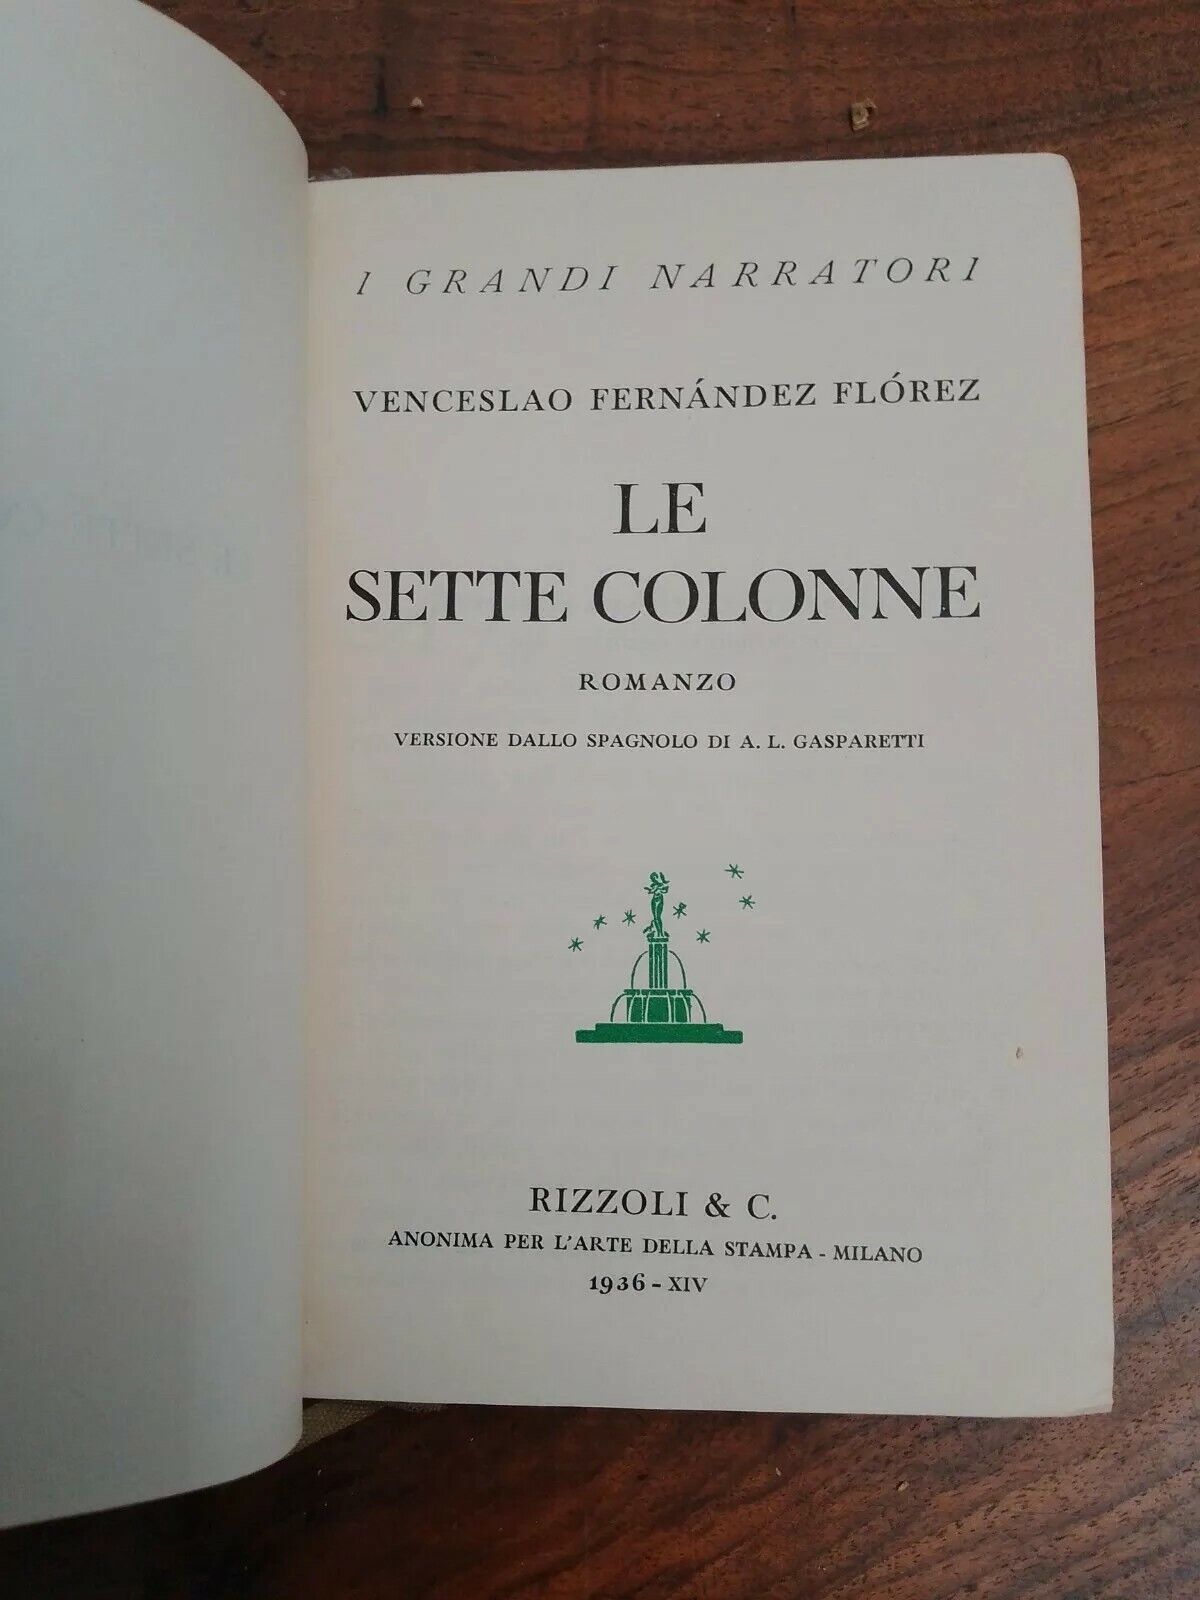 18 Volumes, The great narrators, Rizzoli, 1930s-40s